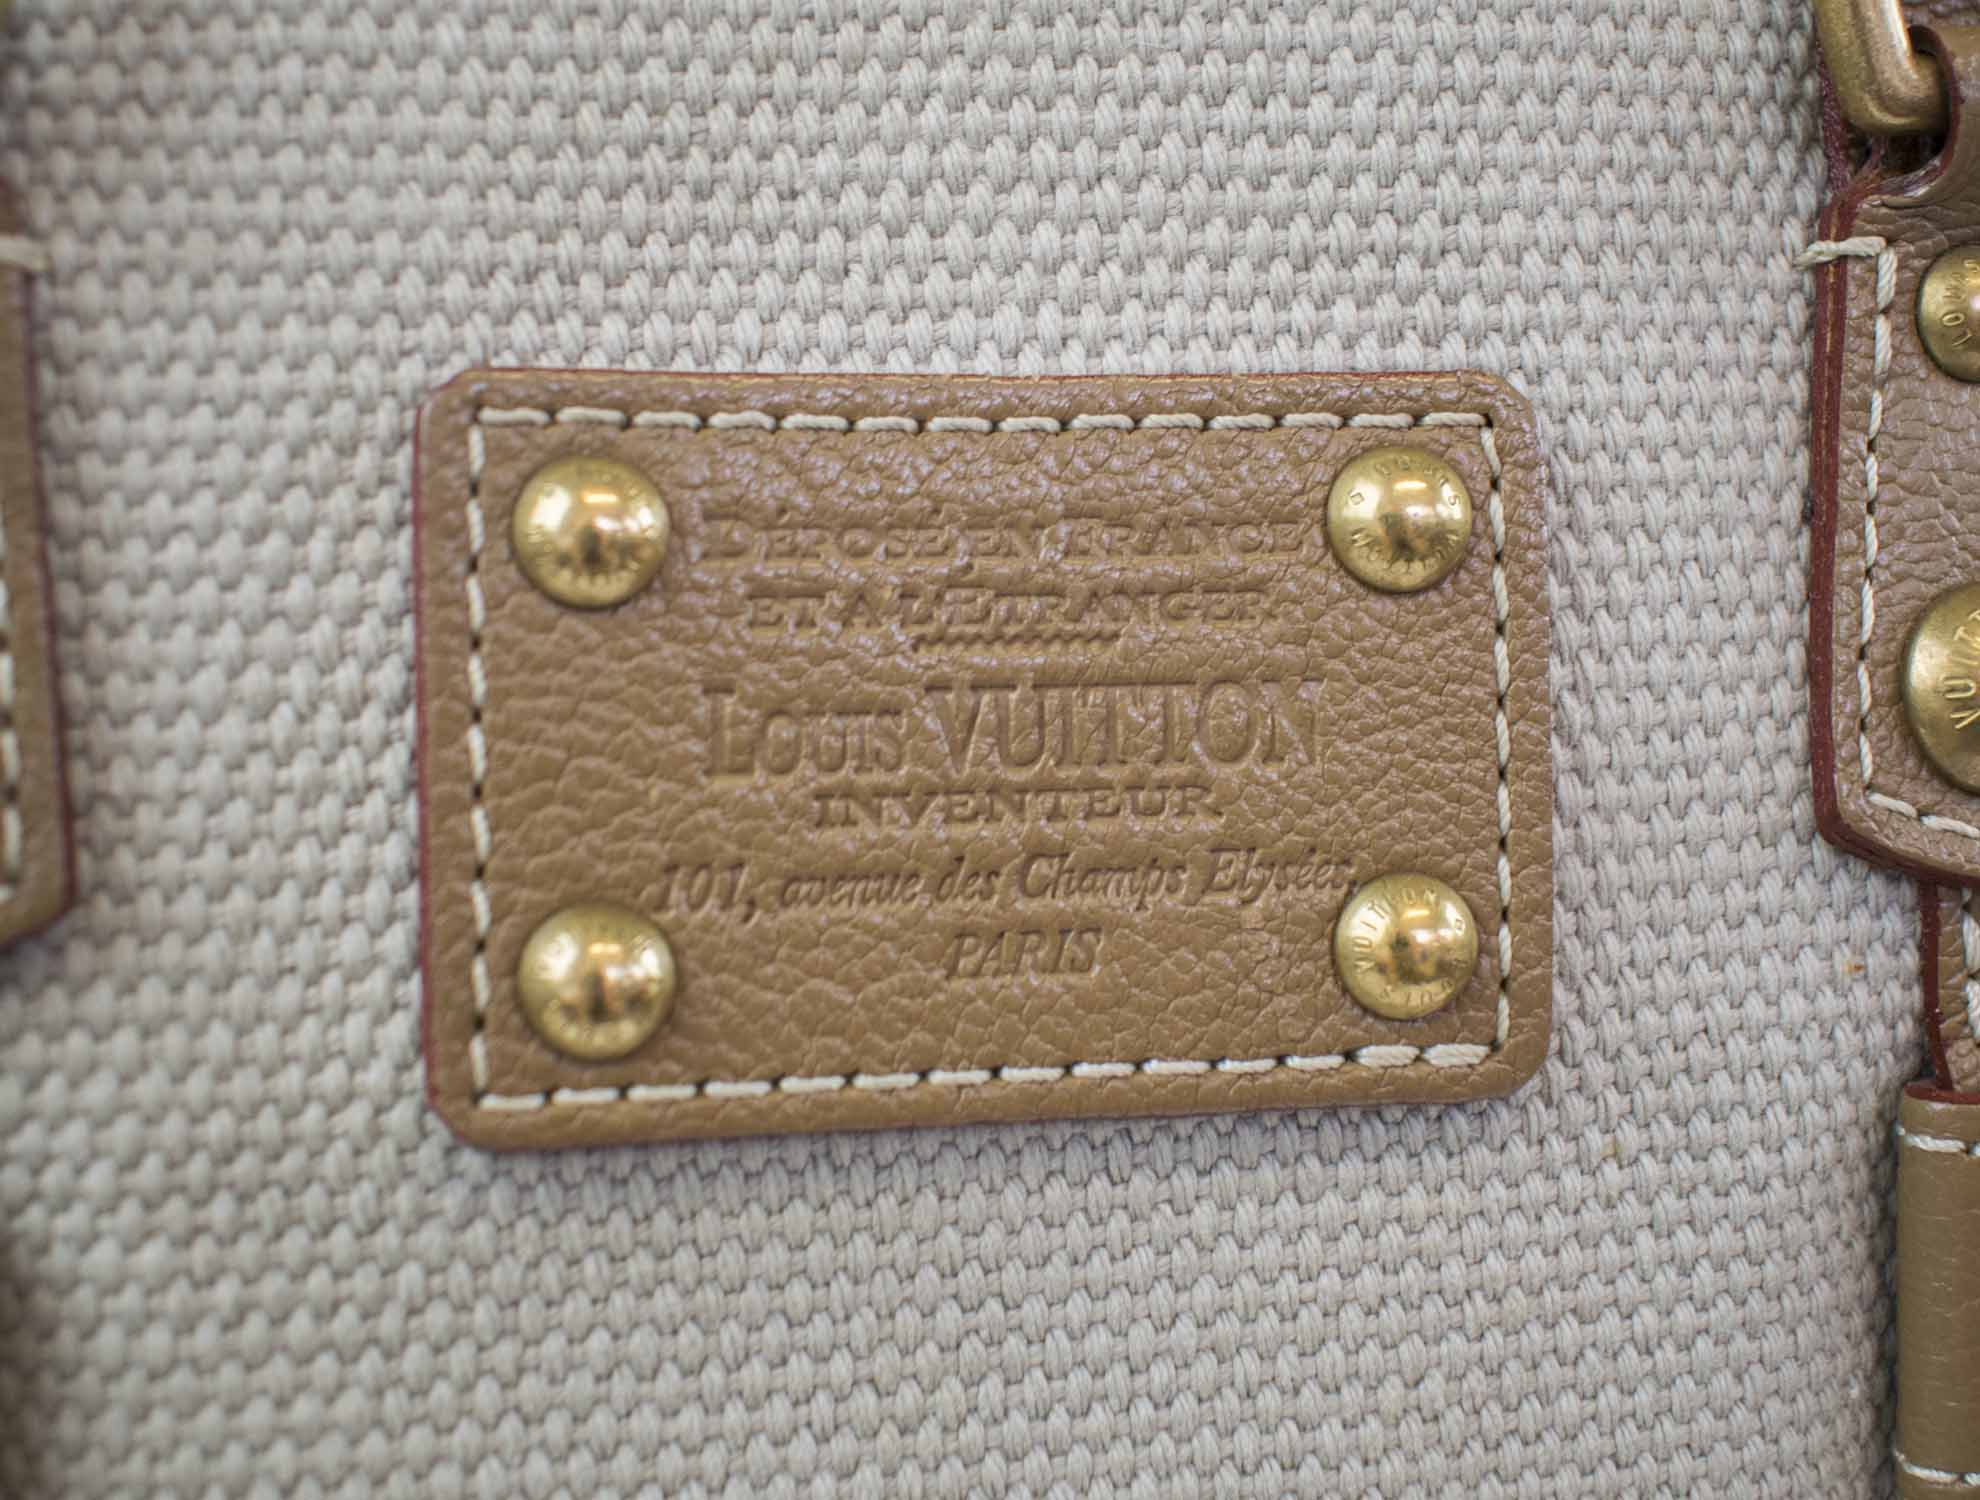 LOUIS VUITTON Monogram Leopard Pleated Steamer Bag 35212